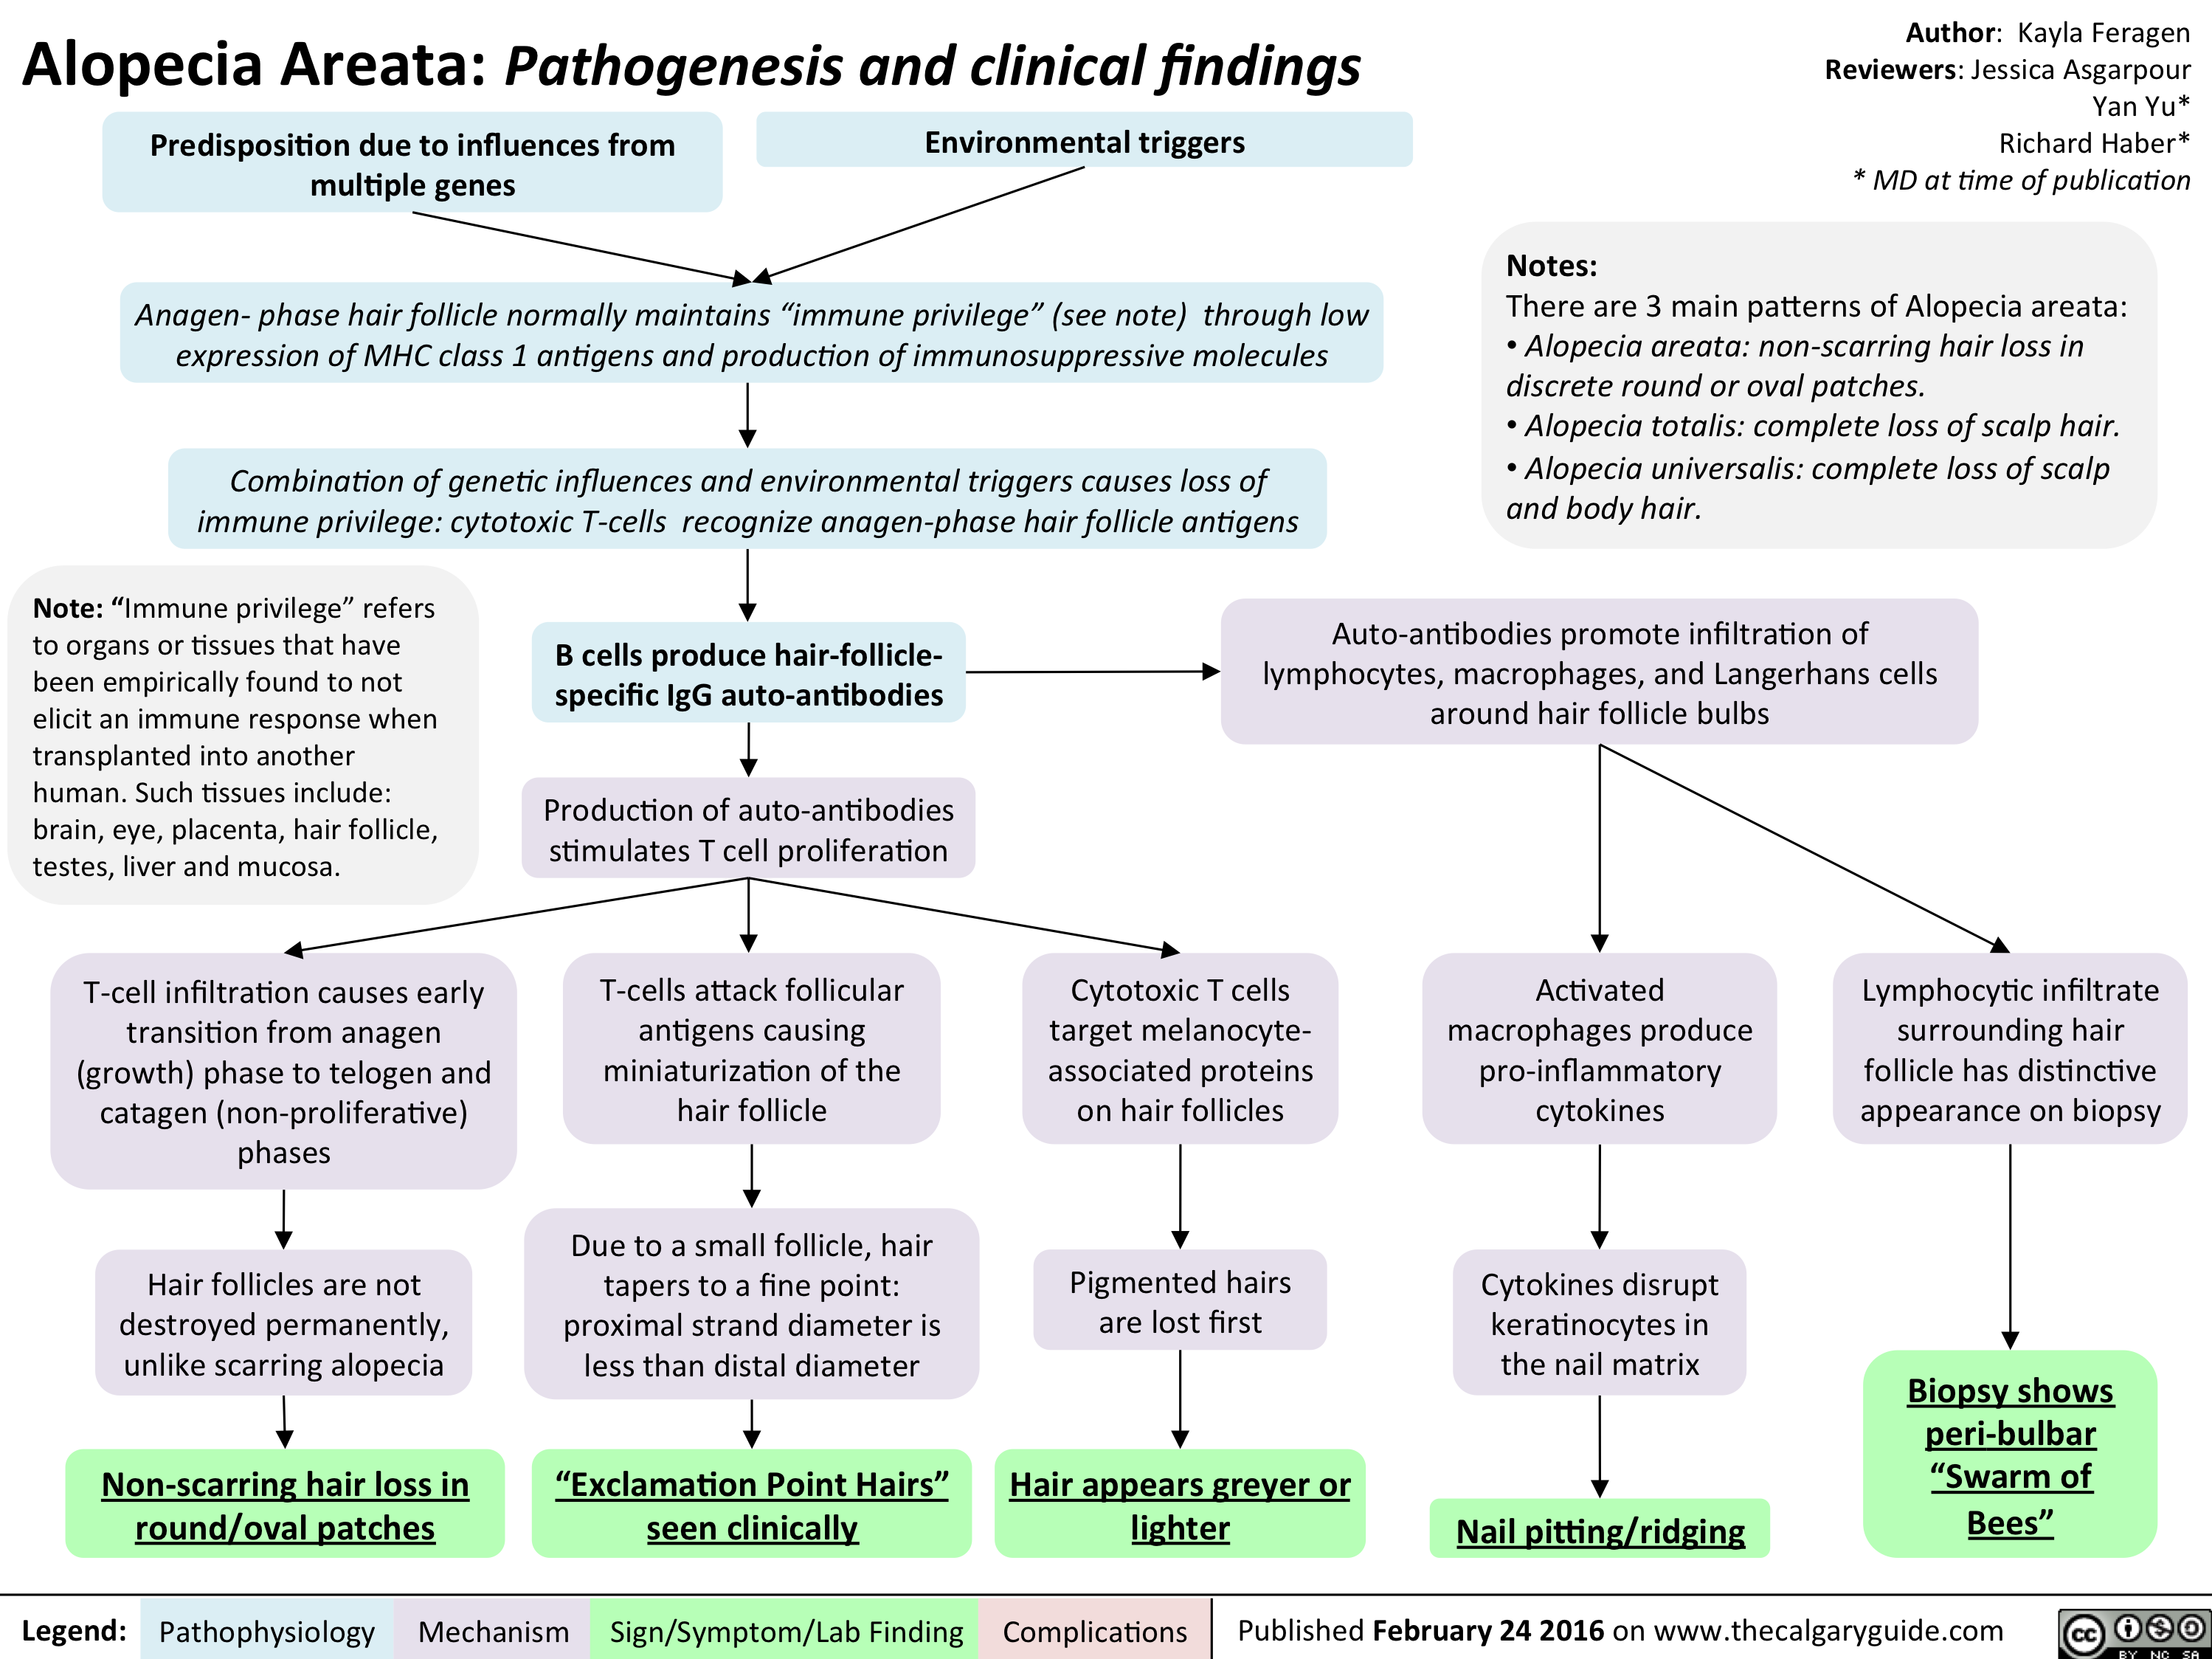 Alopecia Areata - Pathogenesis and clinical findings